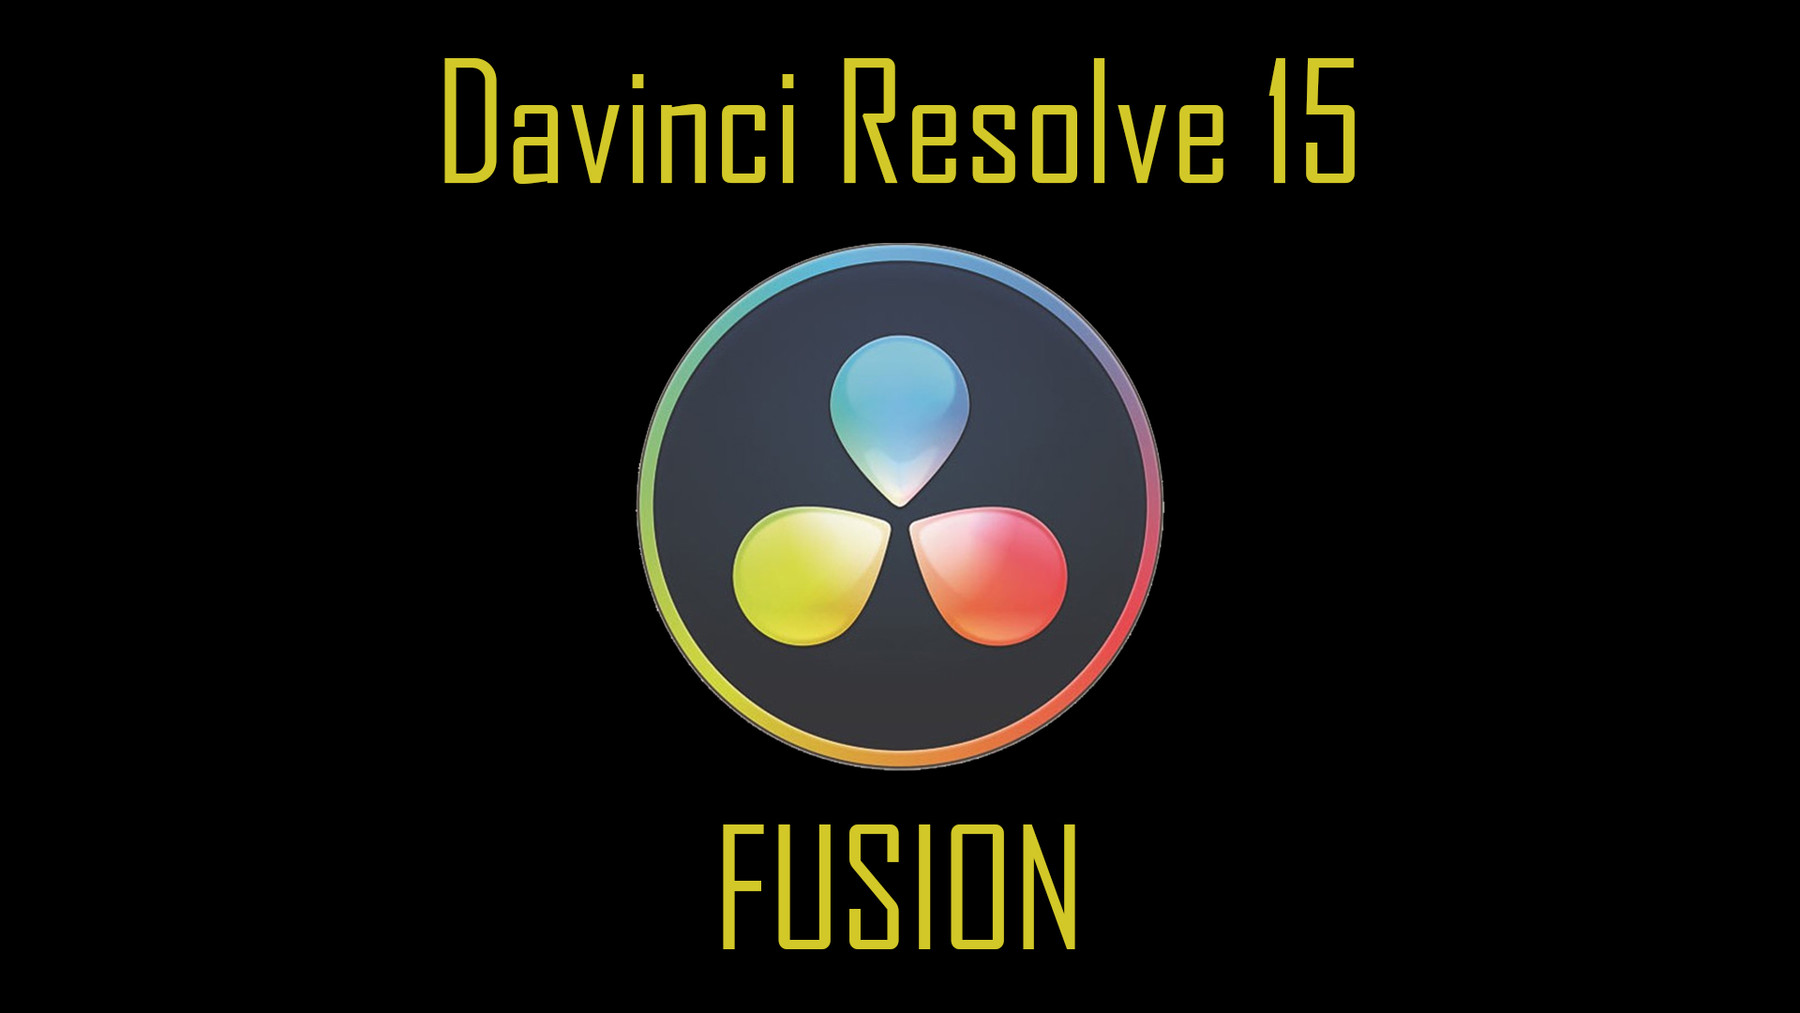 fusion davinci resolve 17